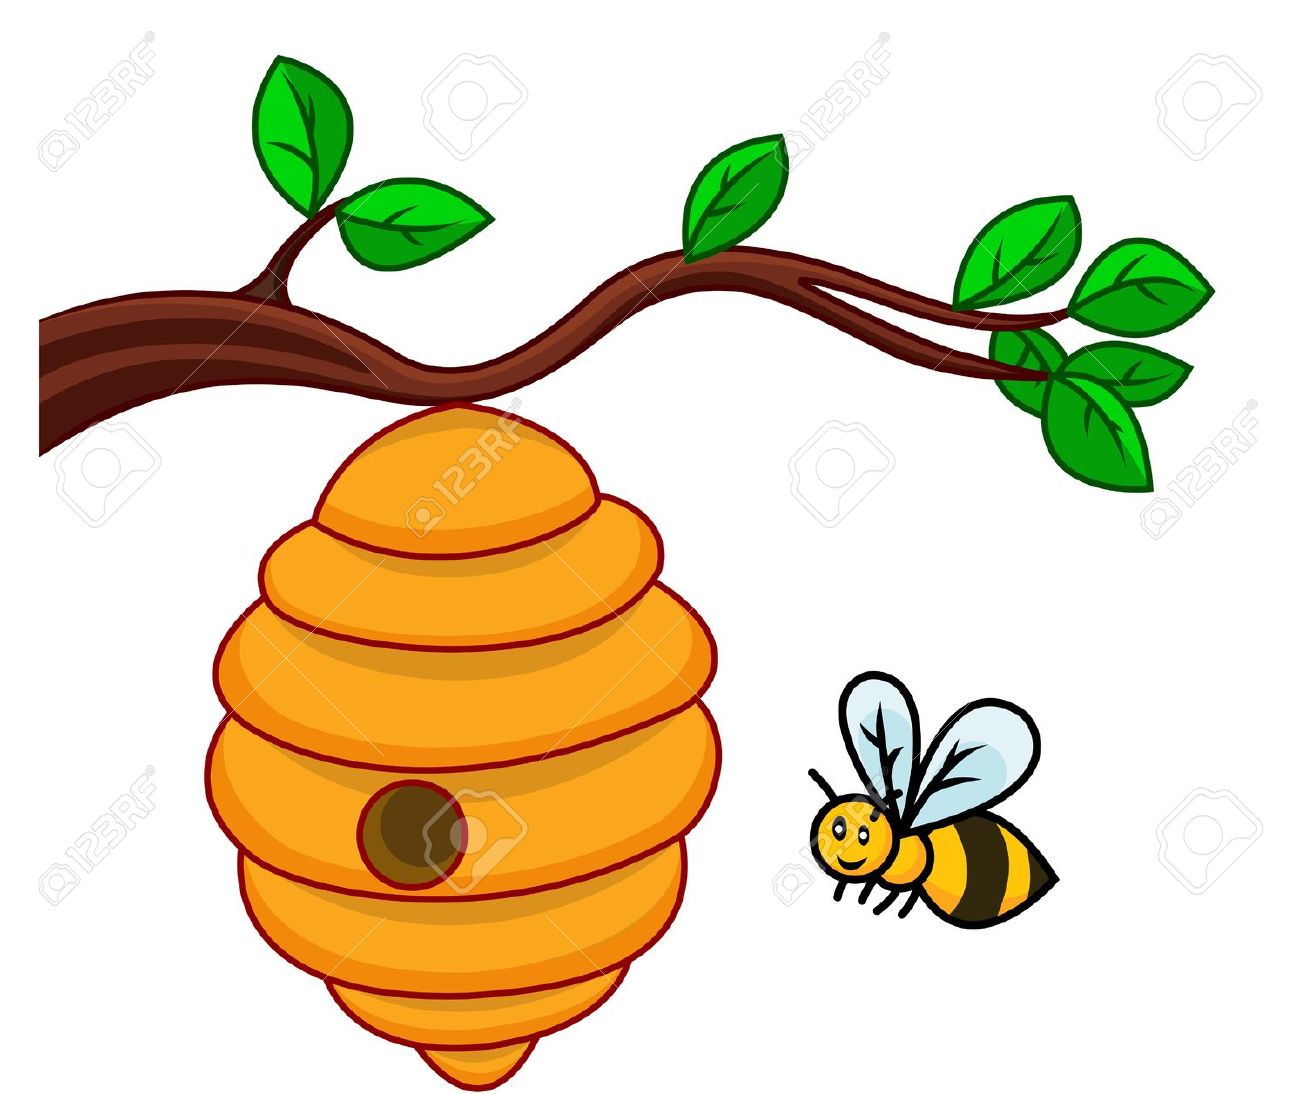 beehive clipart homework